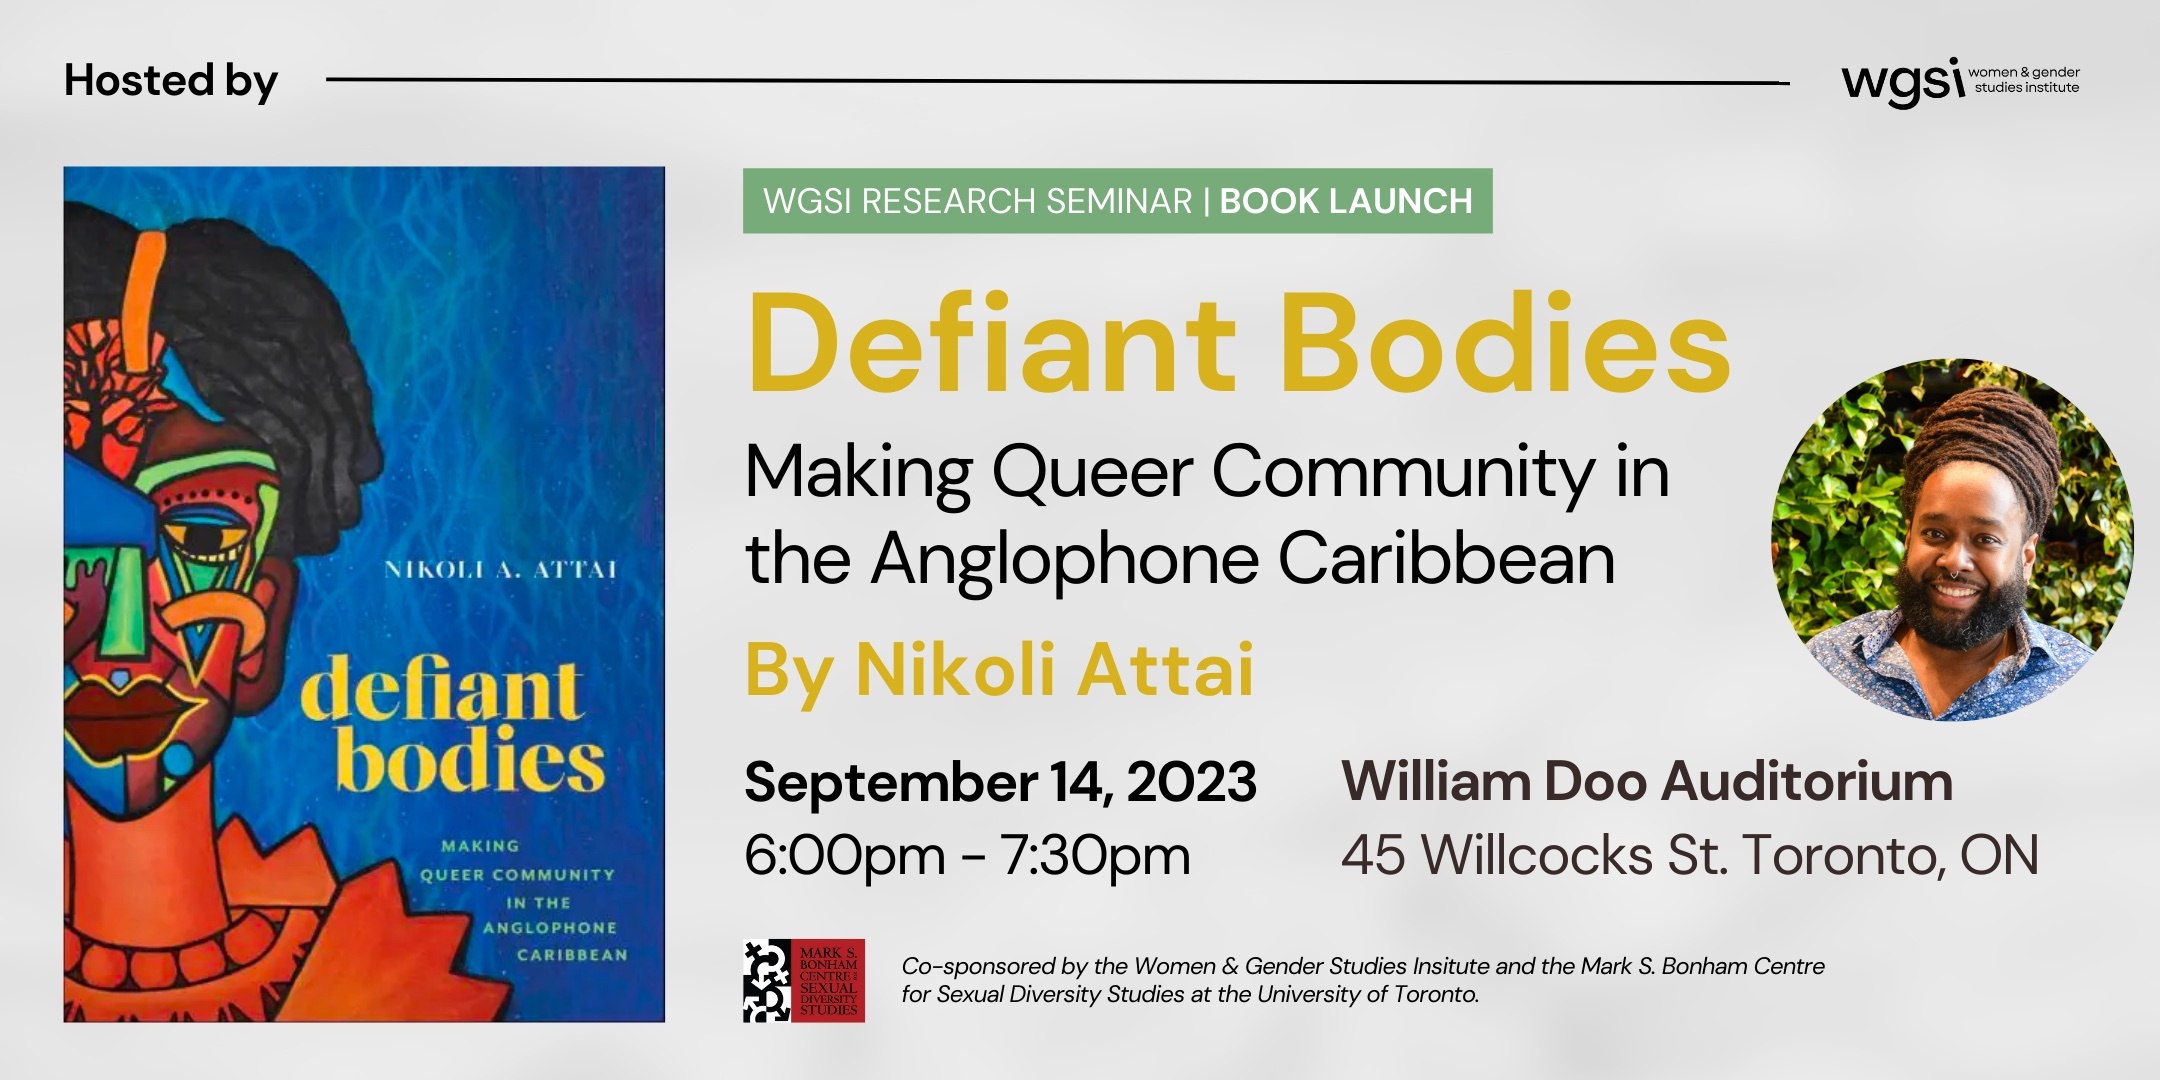 Book Launch: Defiant Bodies by Nikoli Attai